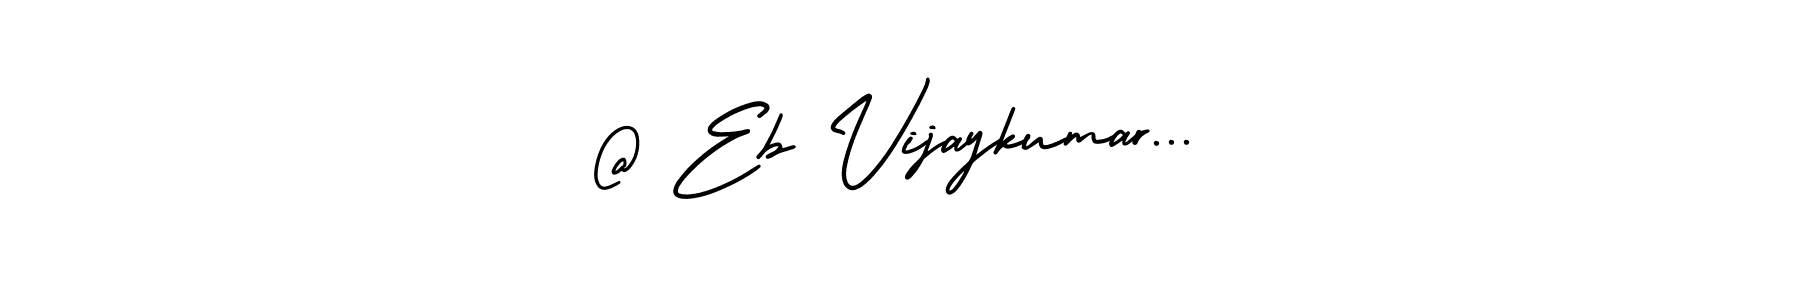 It looks lik you need a new signature style for name @ Eb Vijaykumar.... Design unique handwritten (AmerikaSignatureDemo-Regular) signature with our free signature maker in just a few clicks. @ Eb Vijaykumar... signature style 3 images and pictures png